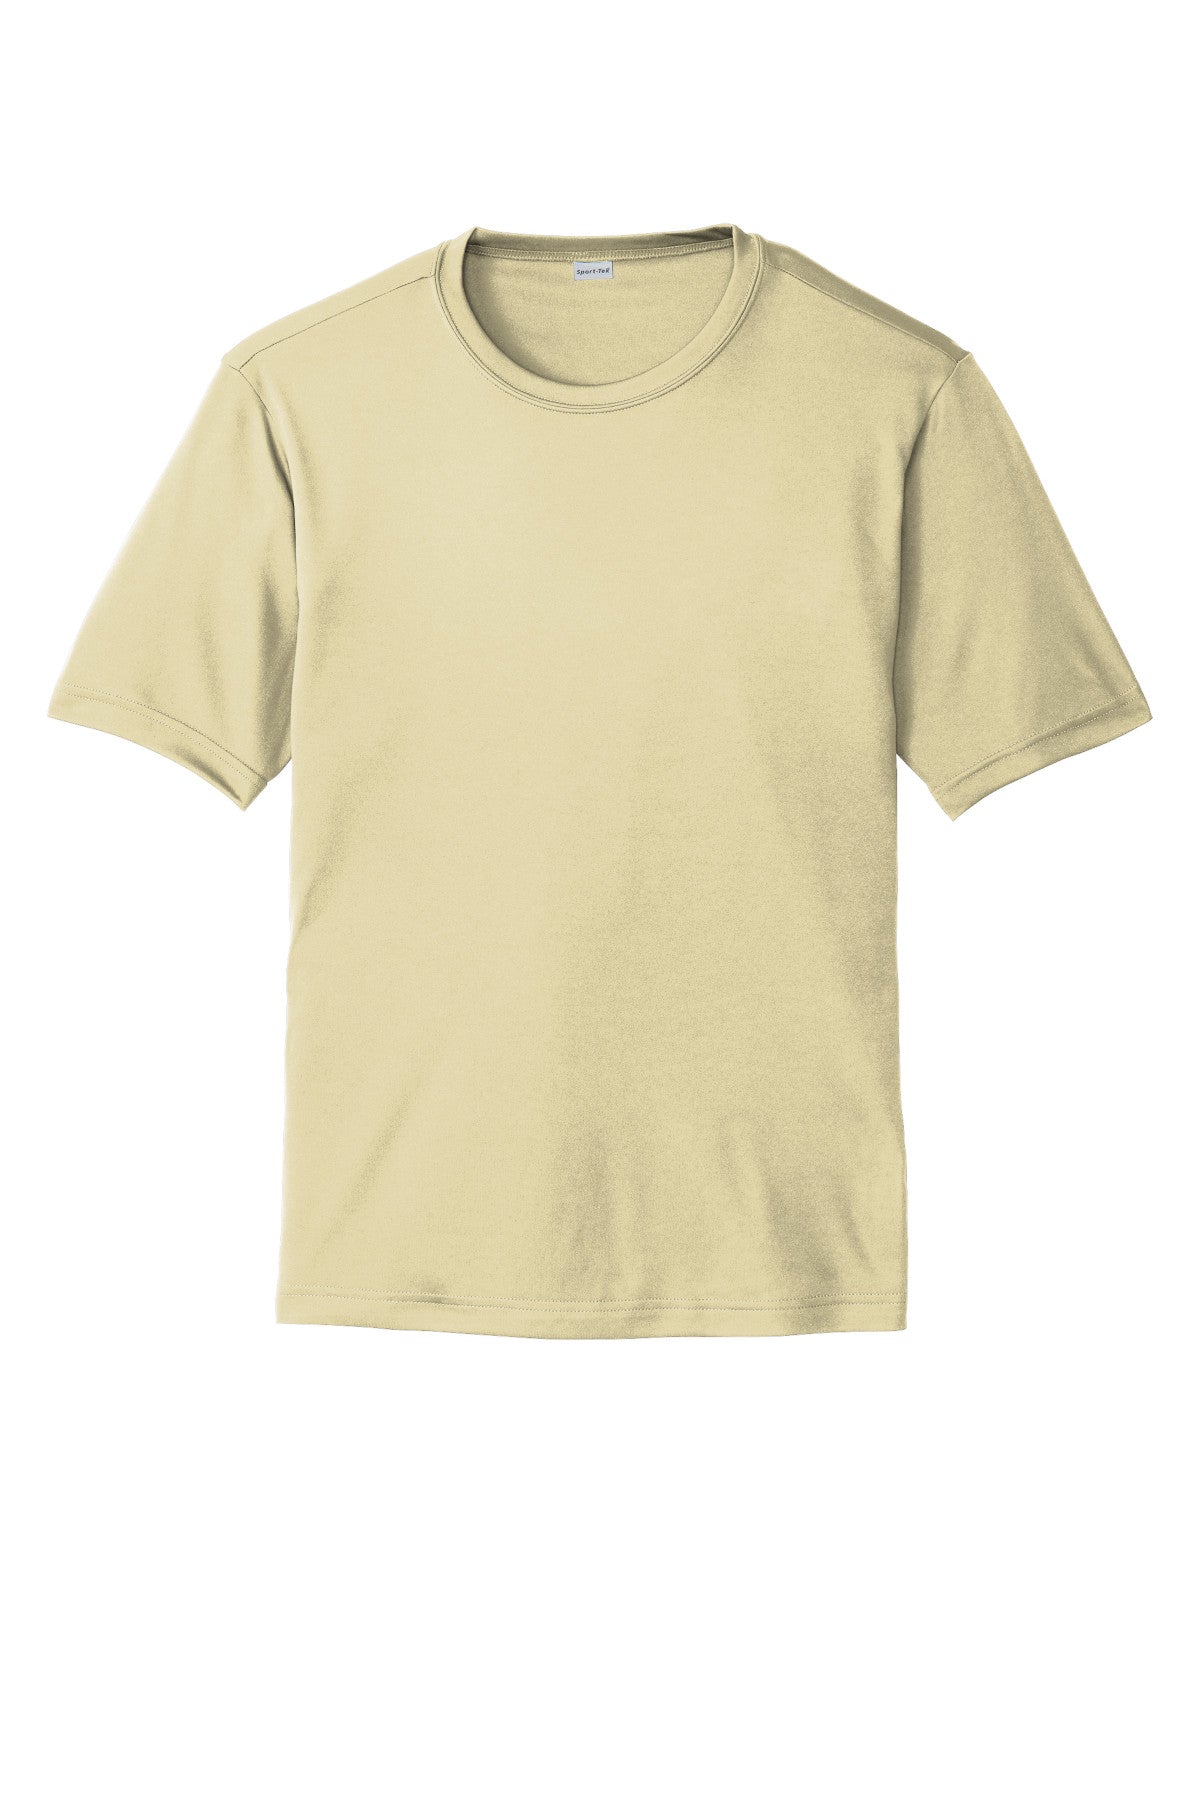 Sport-Tek St350 Polyester Adult T-Shirt Ad Small / Vegas Gold